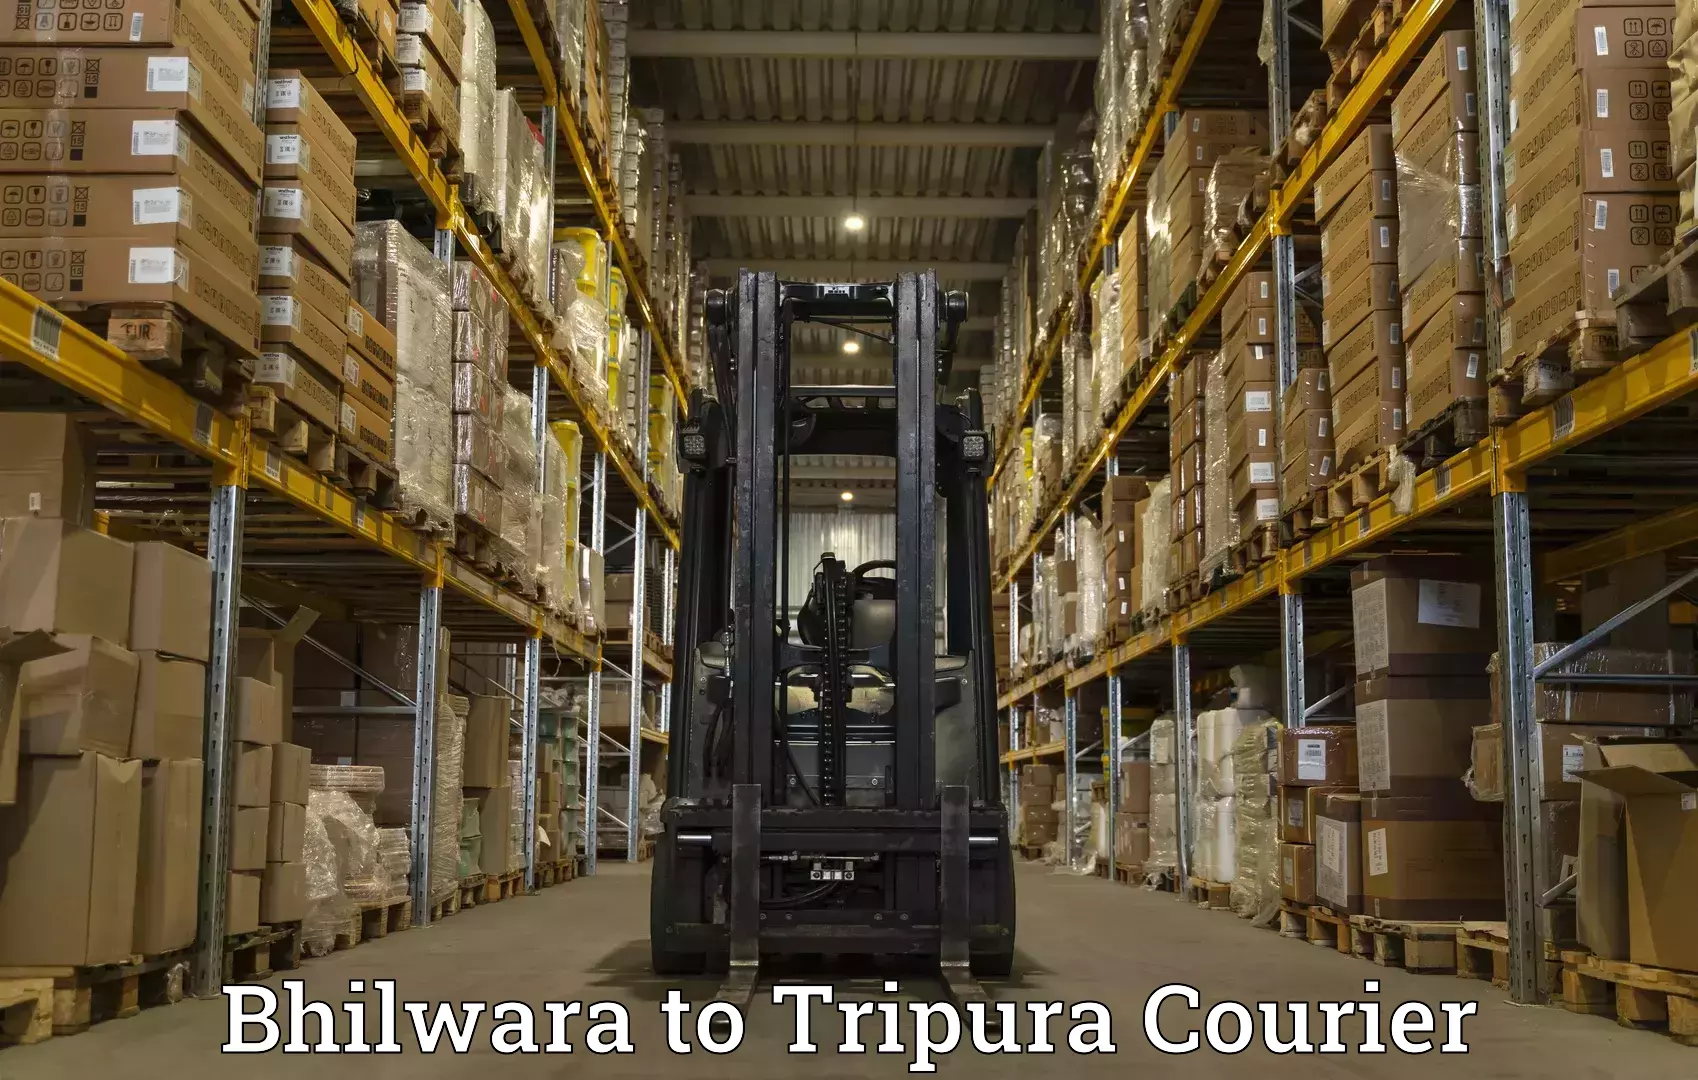 International courier rates Bhilwara to Udaipur Tripura